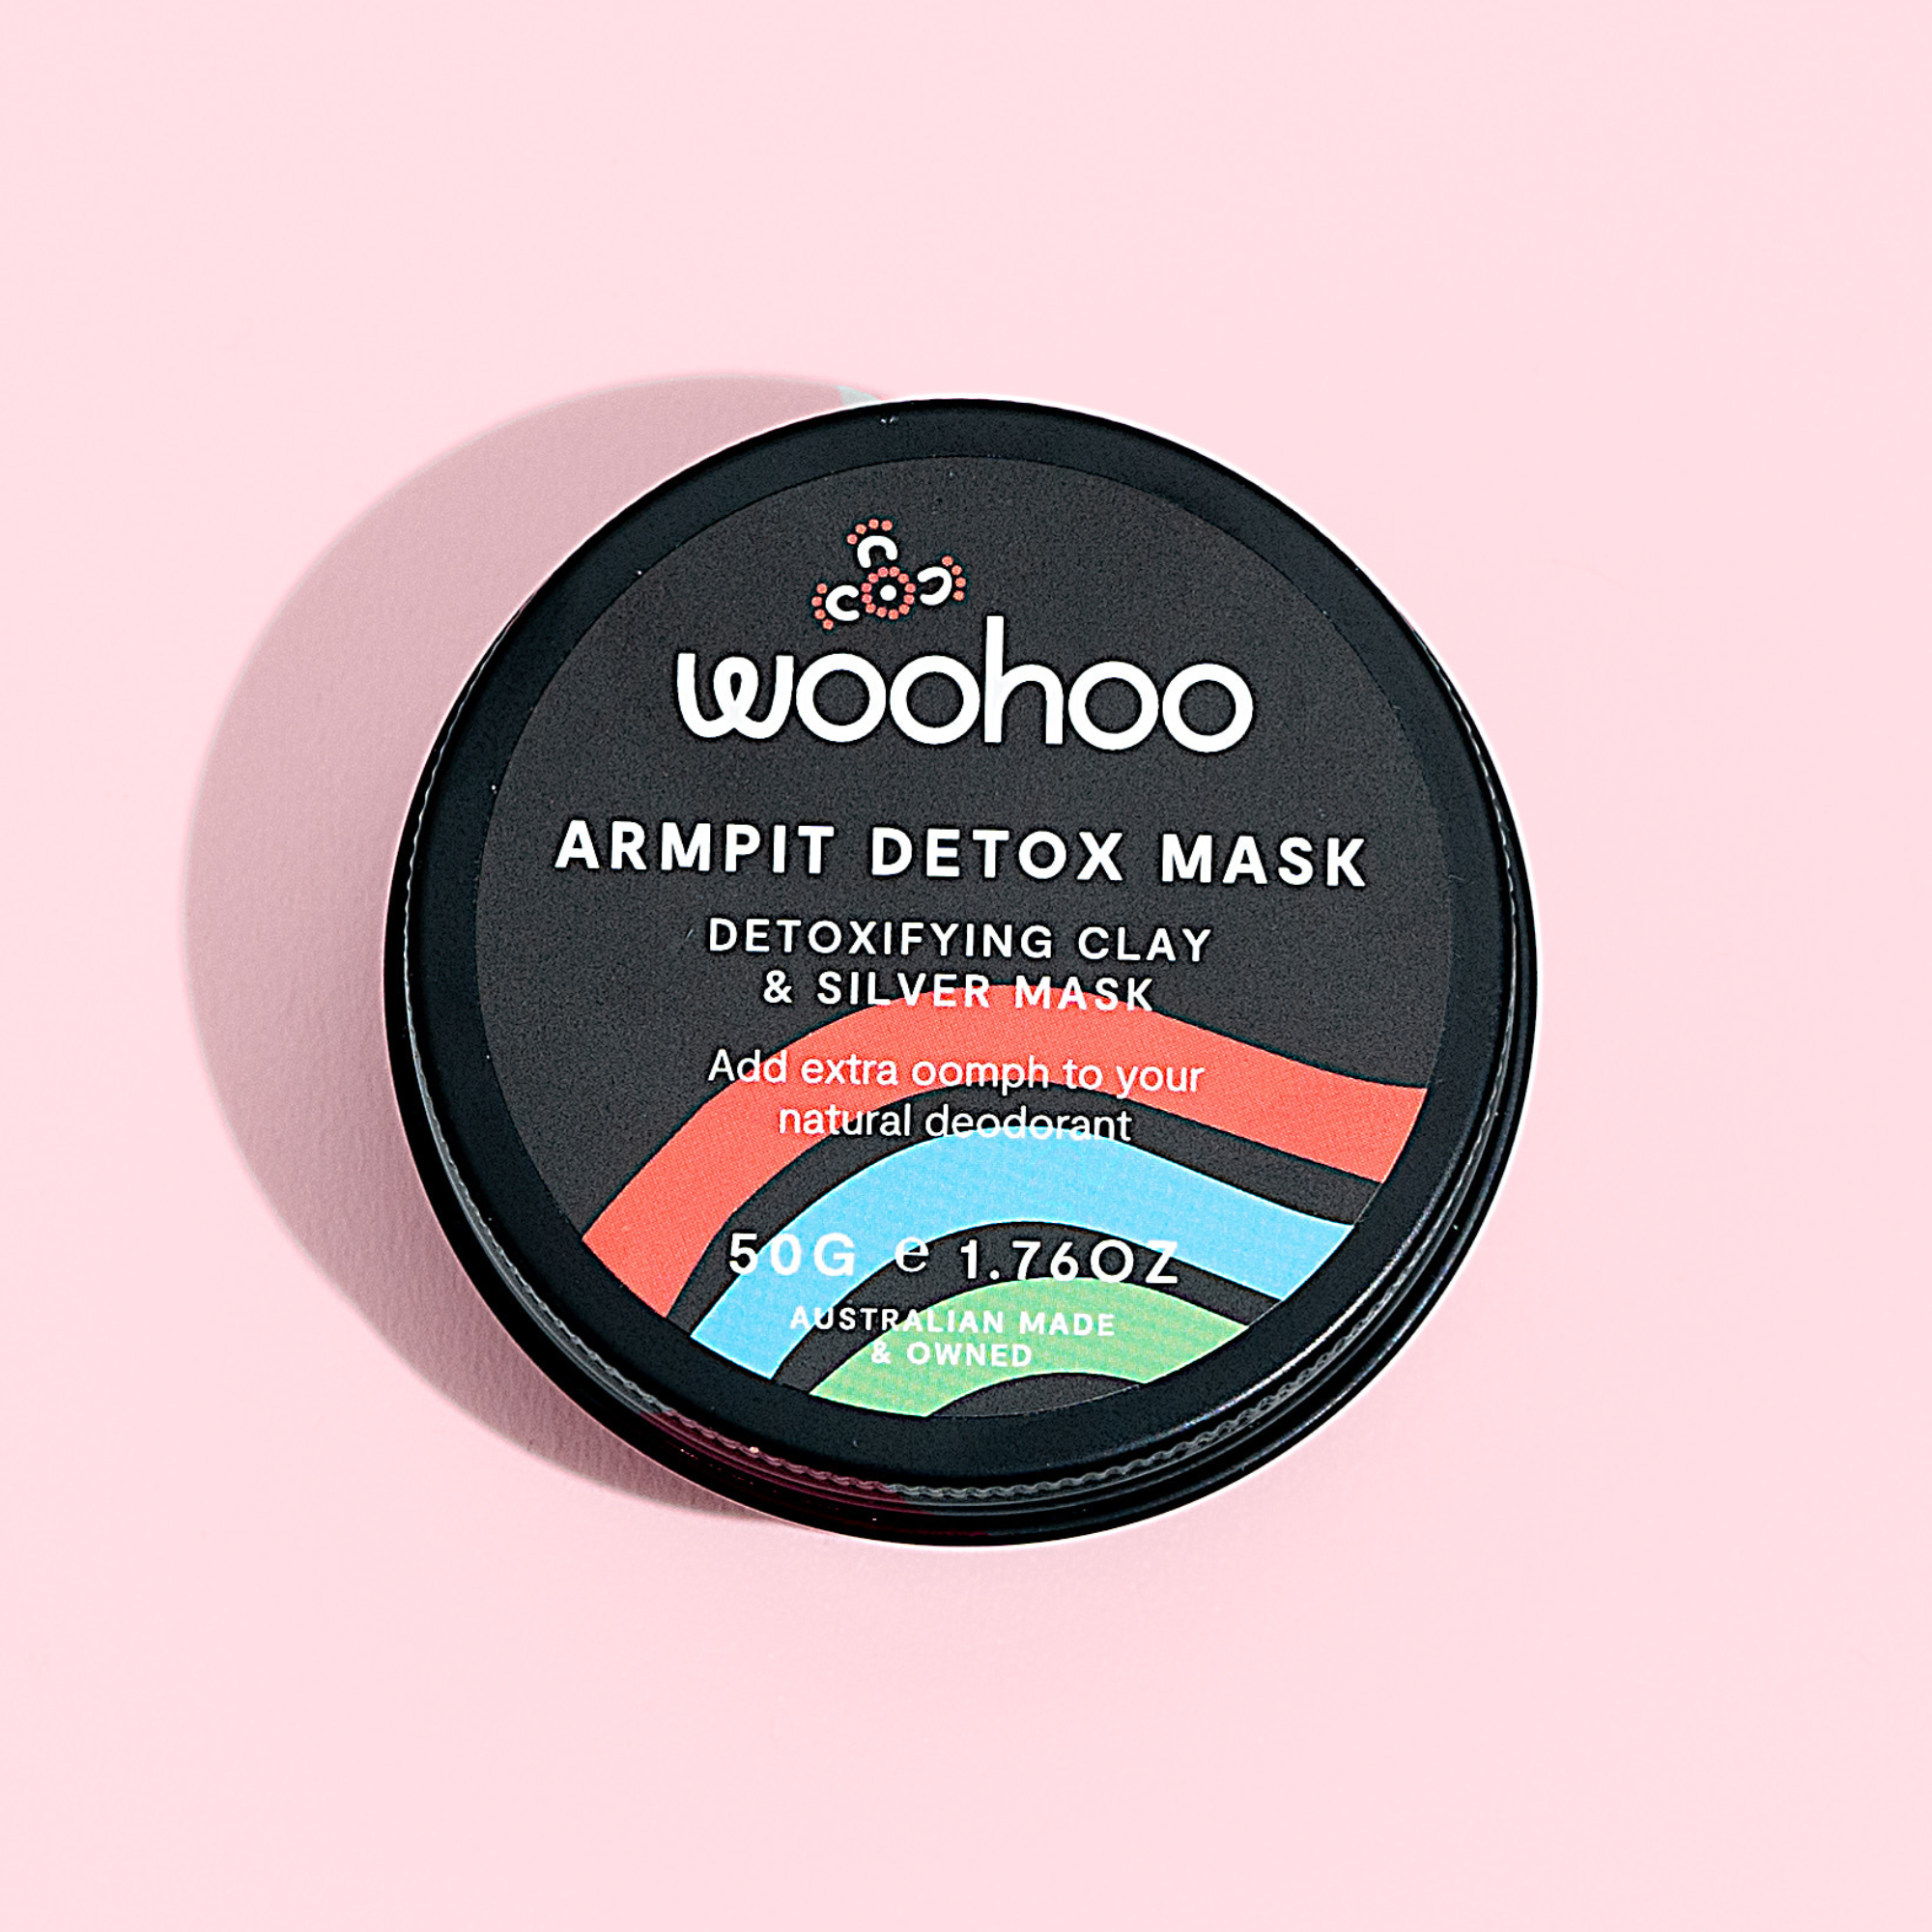 Woohoo armpit detox mask front of tin